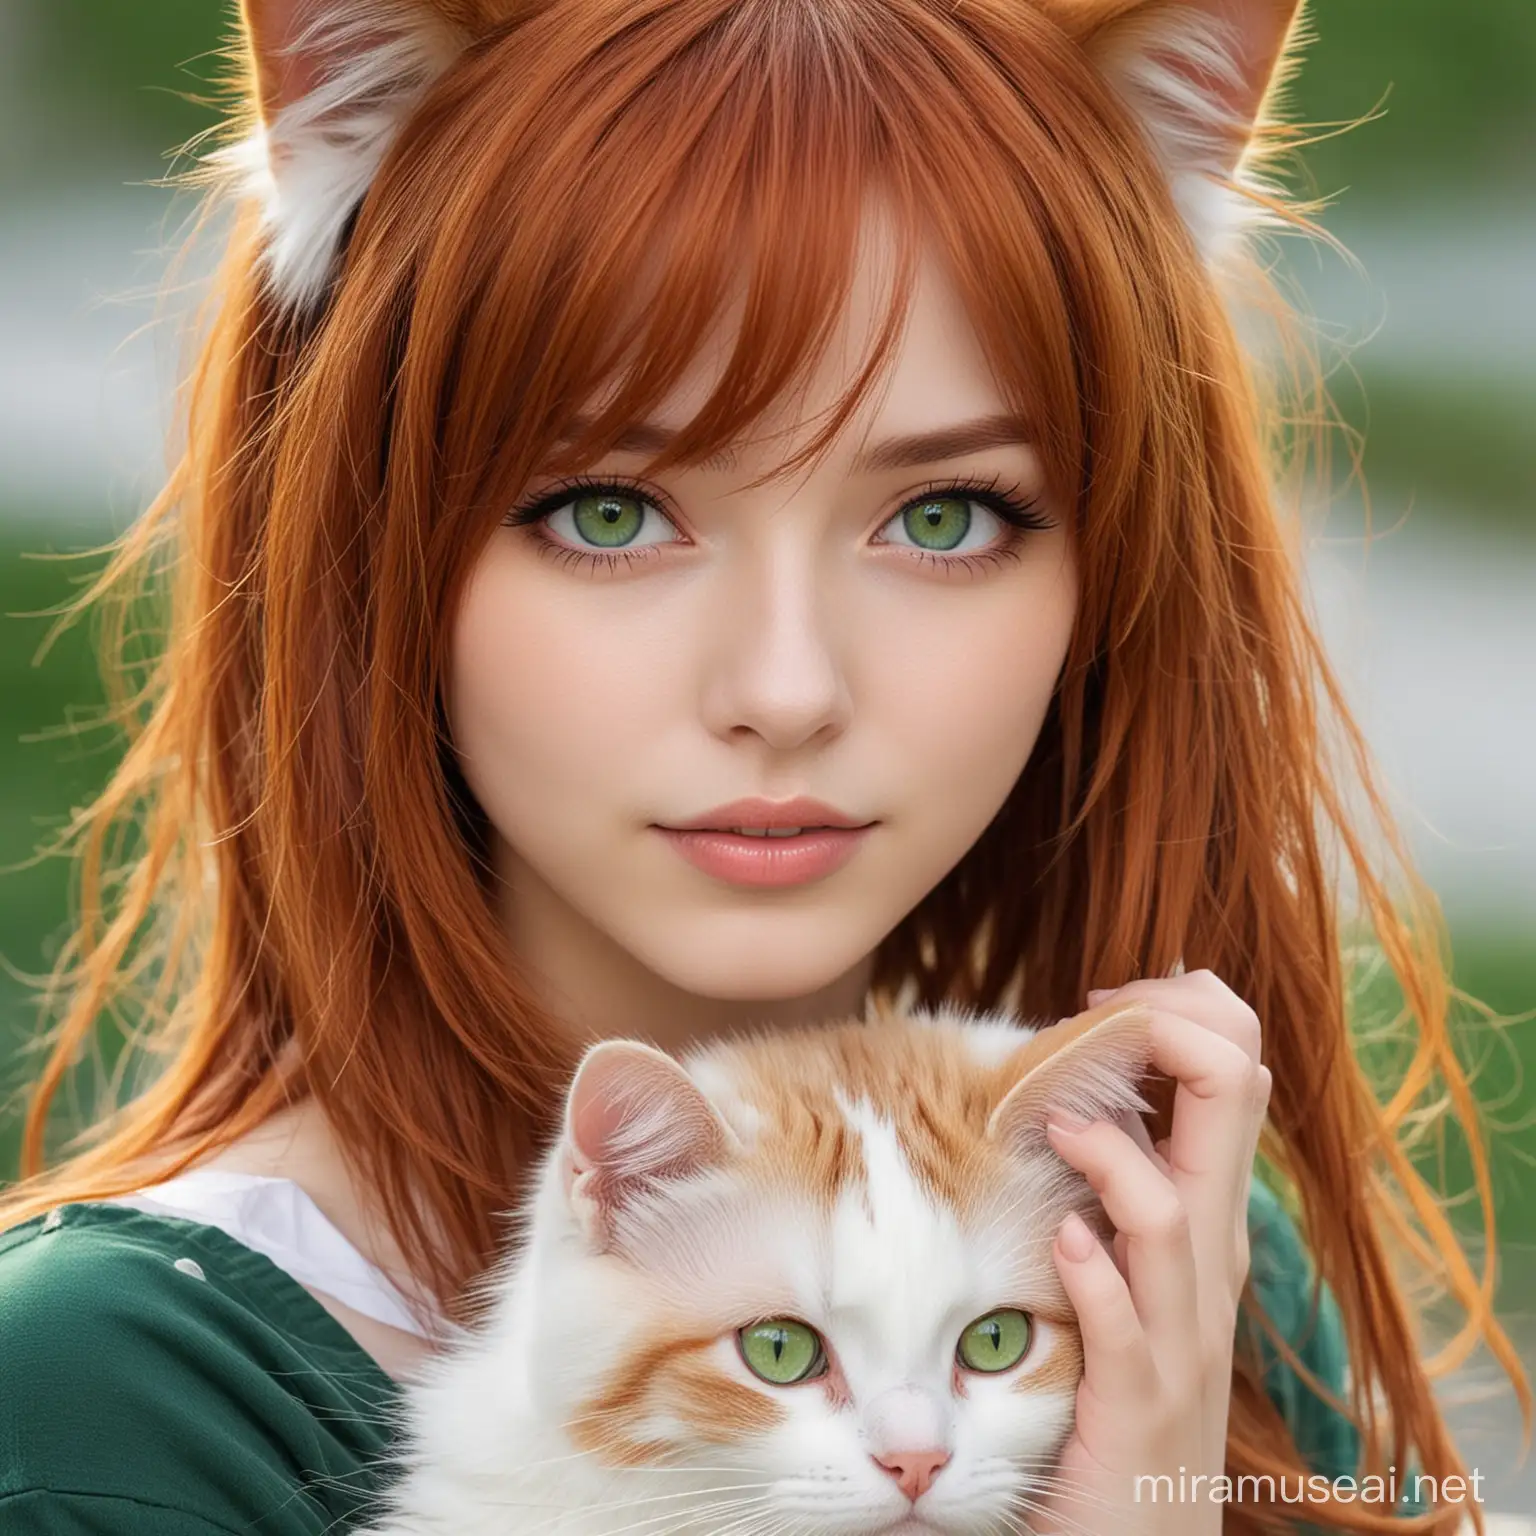 Beautiful Neko Redhead with Green Eyes